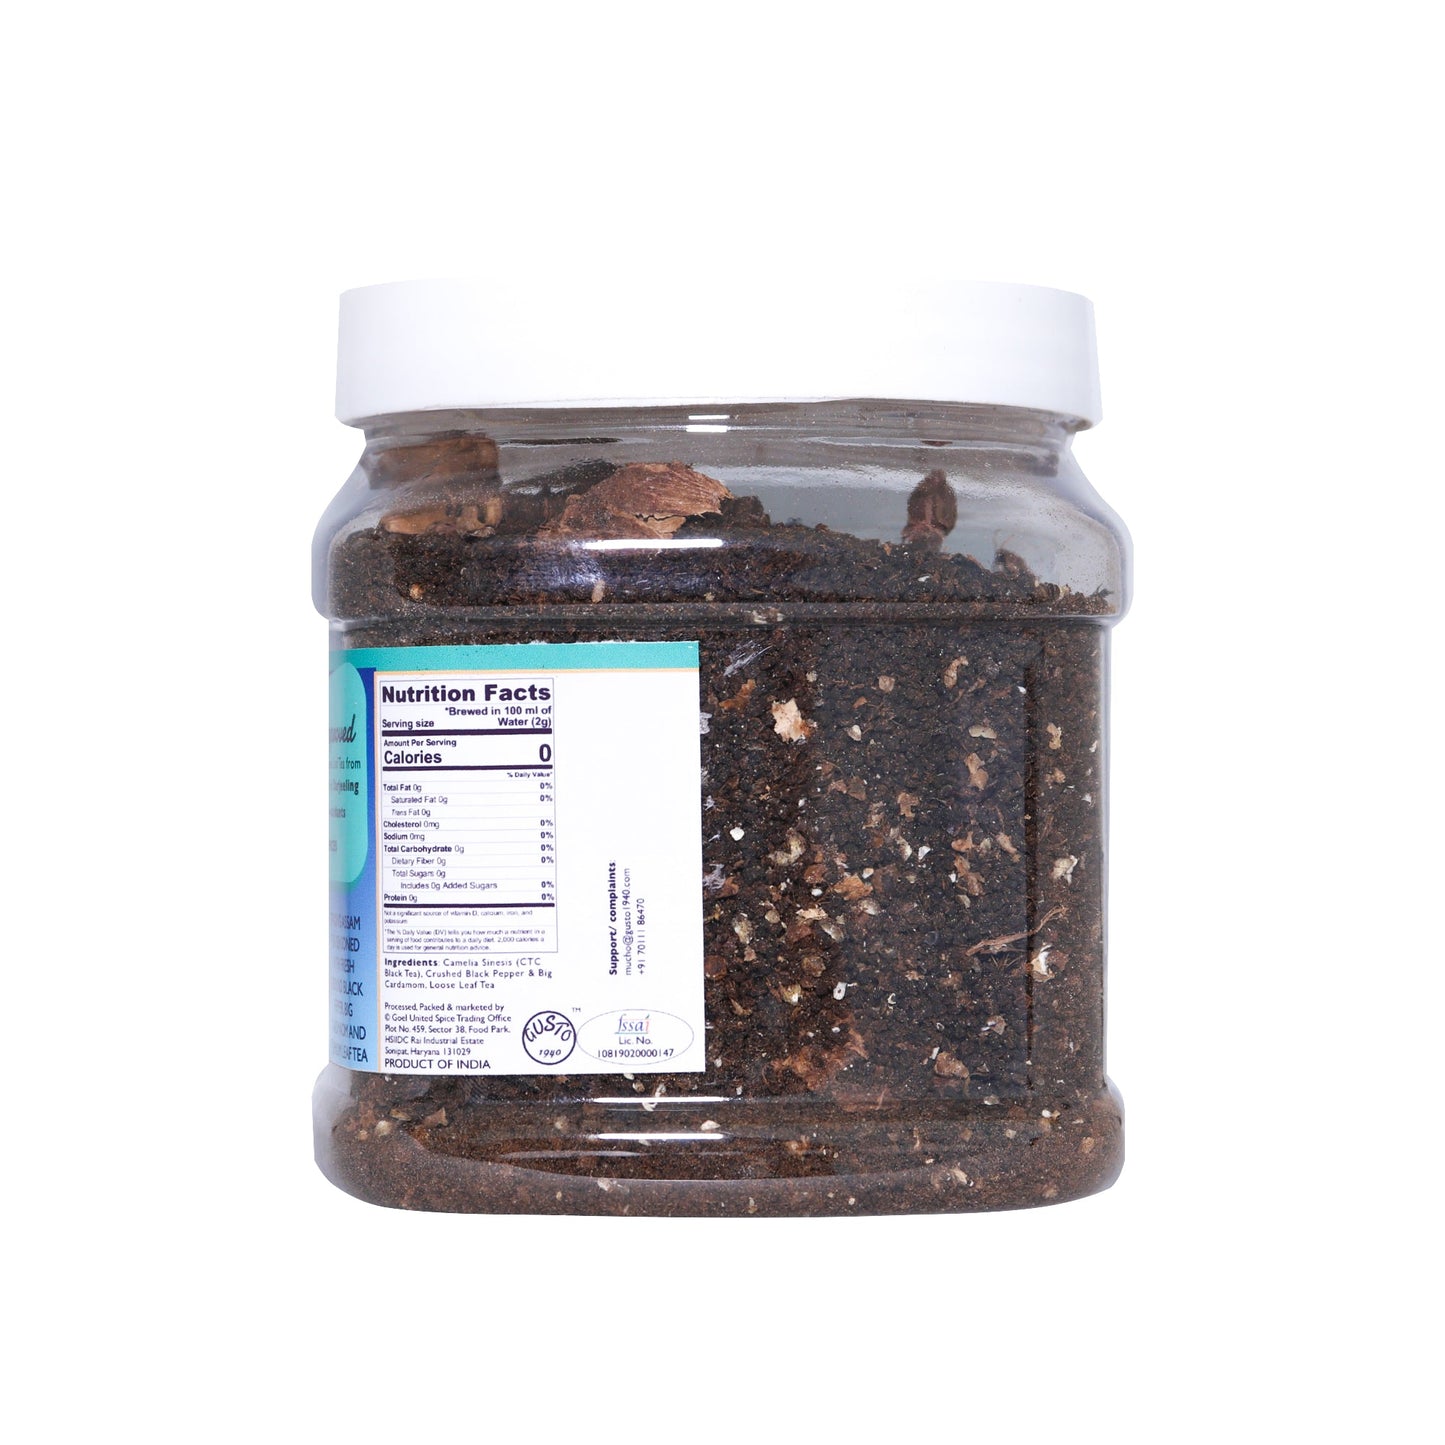 Cold Relief Tea - Tassyam Organics